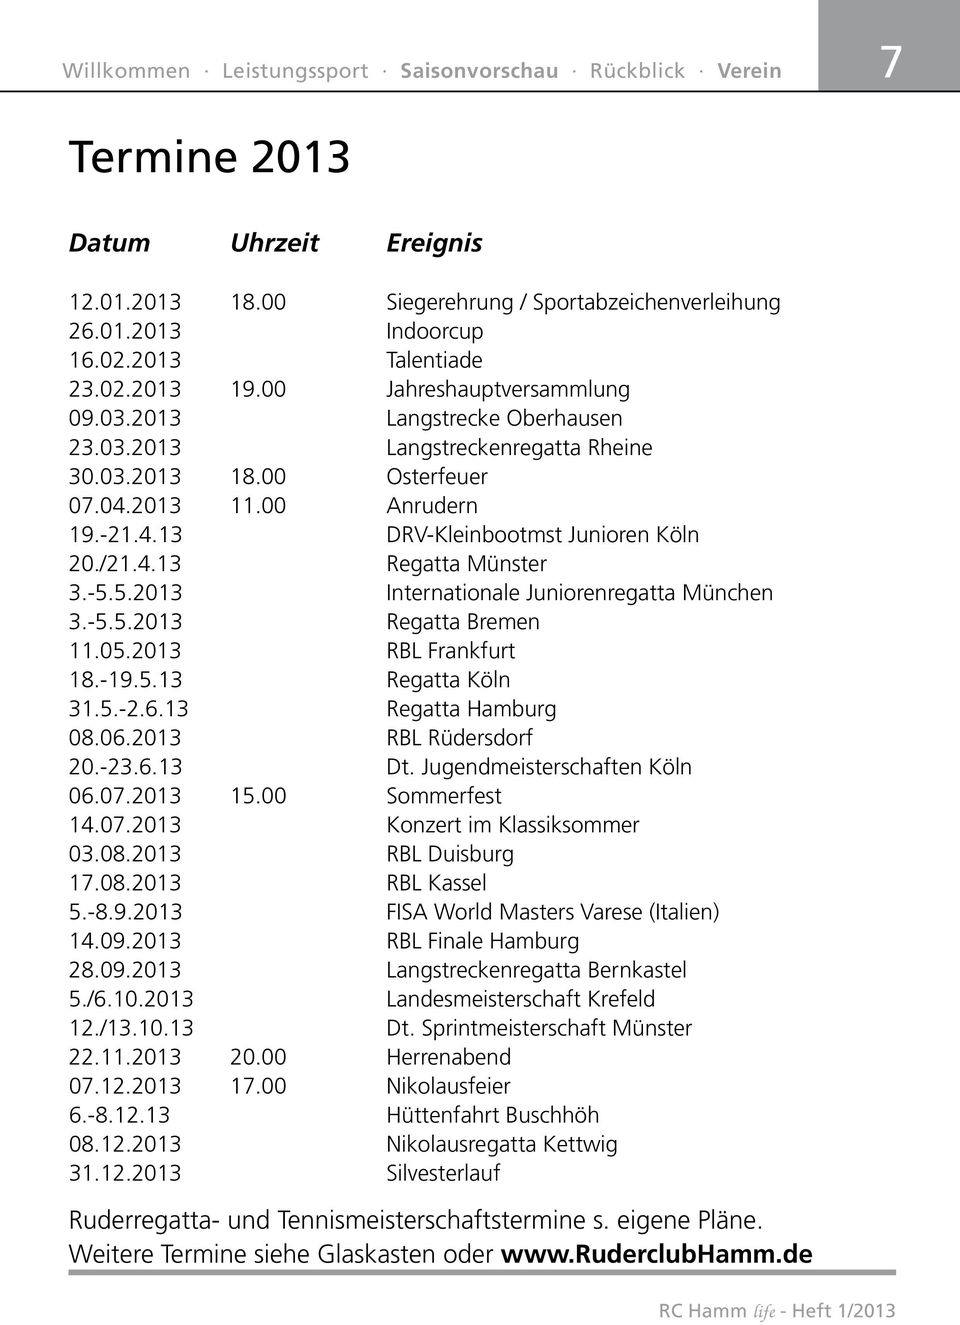 /21.4.13 Regatta Münster 3.-5.5.2013 Internationale Juniorenregatta München 3.-5.5.2013 Regatta Bremen 11.05.2013 RBL Frankfurt 18.-19.5.13 Regatta Köln 31.5.-2.6.13 Regatta Hamburg 08.06.